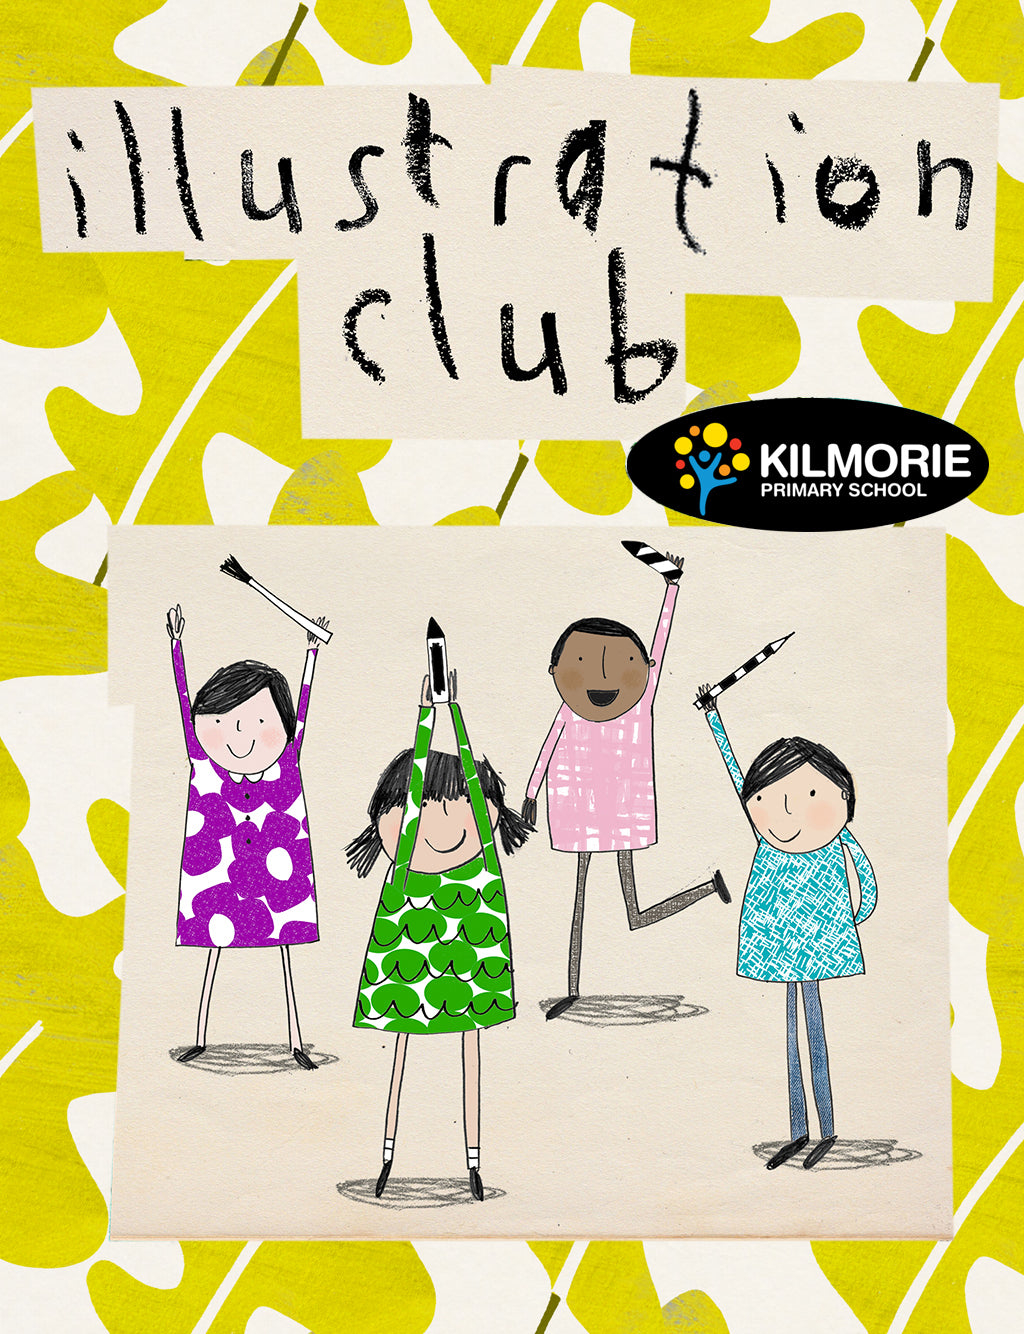 Tuesday Illustration Club Yrs 3, 4, 5 & 6 - Kilmorie School AUTUMN TERM, 13 weeks